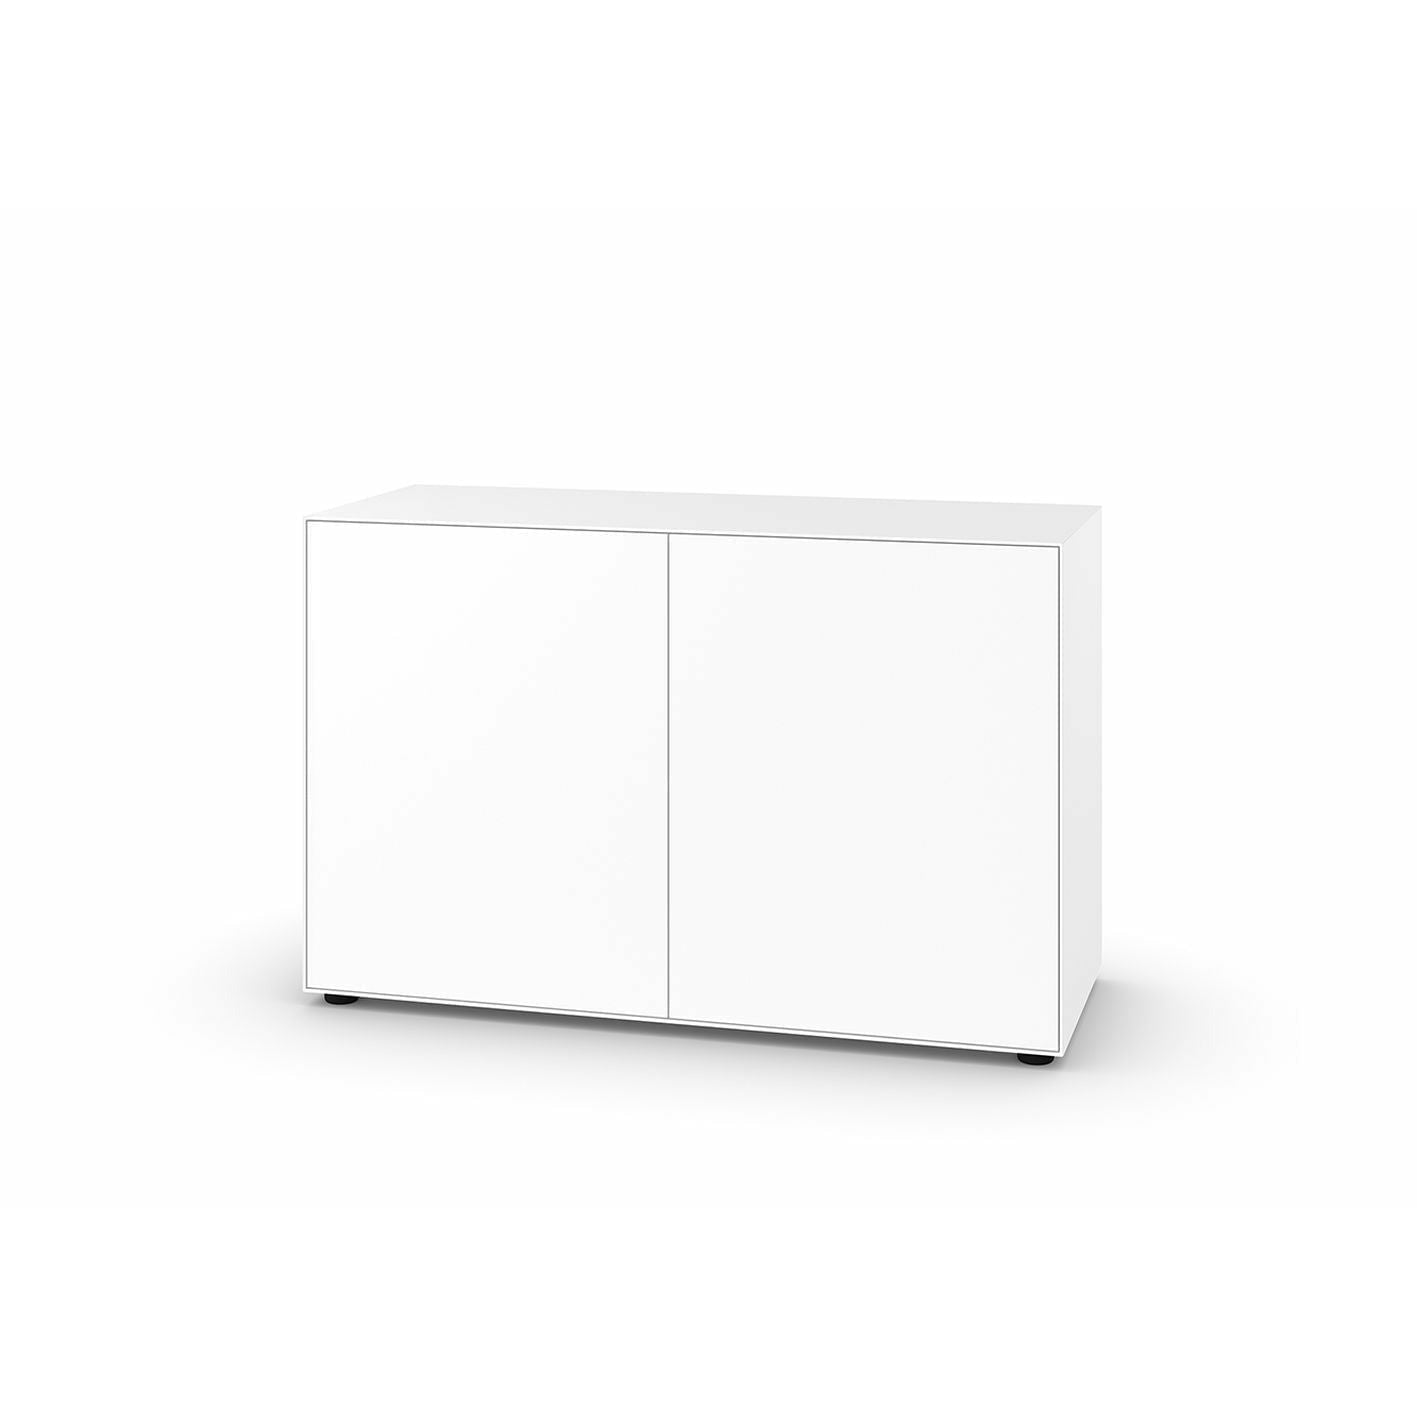 Piure Nex Pur -laatikon ovi HX W 75X120 cm, 1 hylly, valkoinen